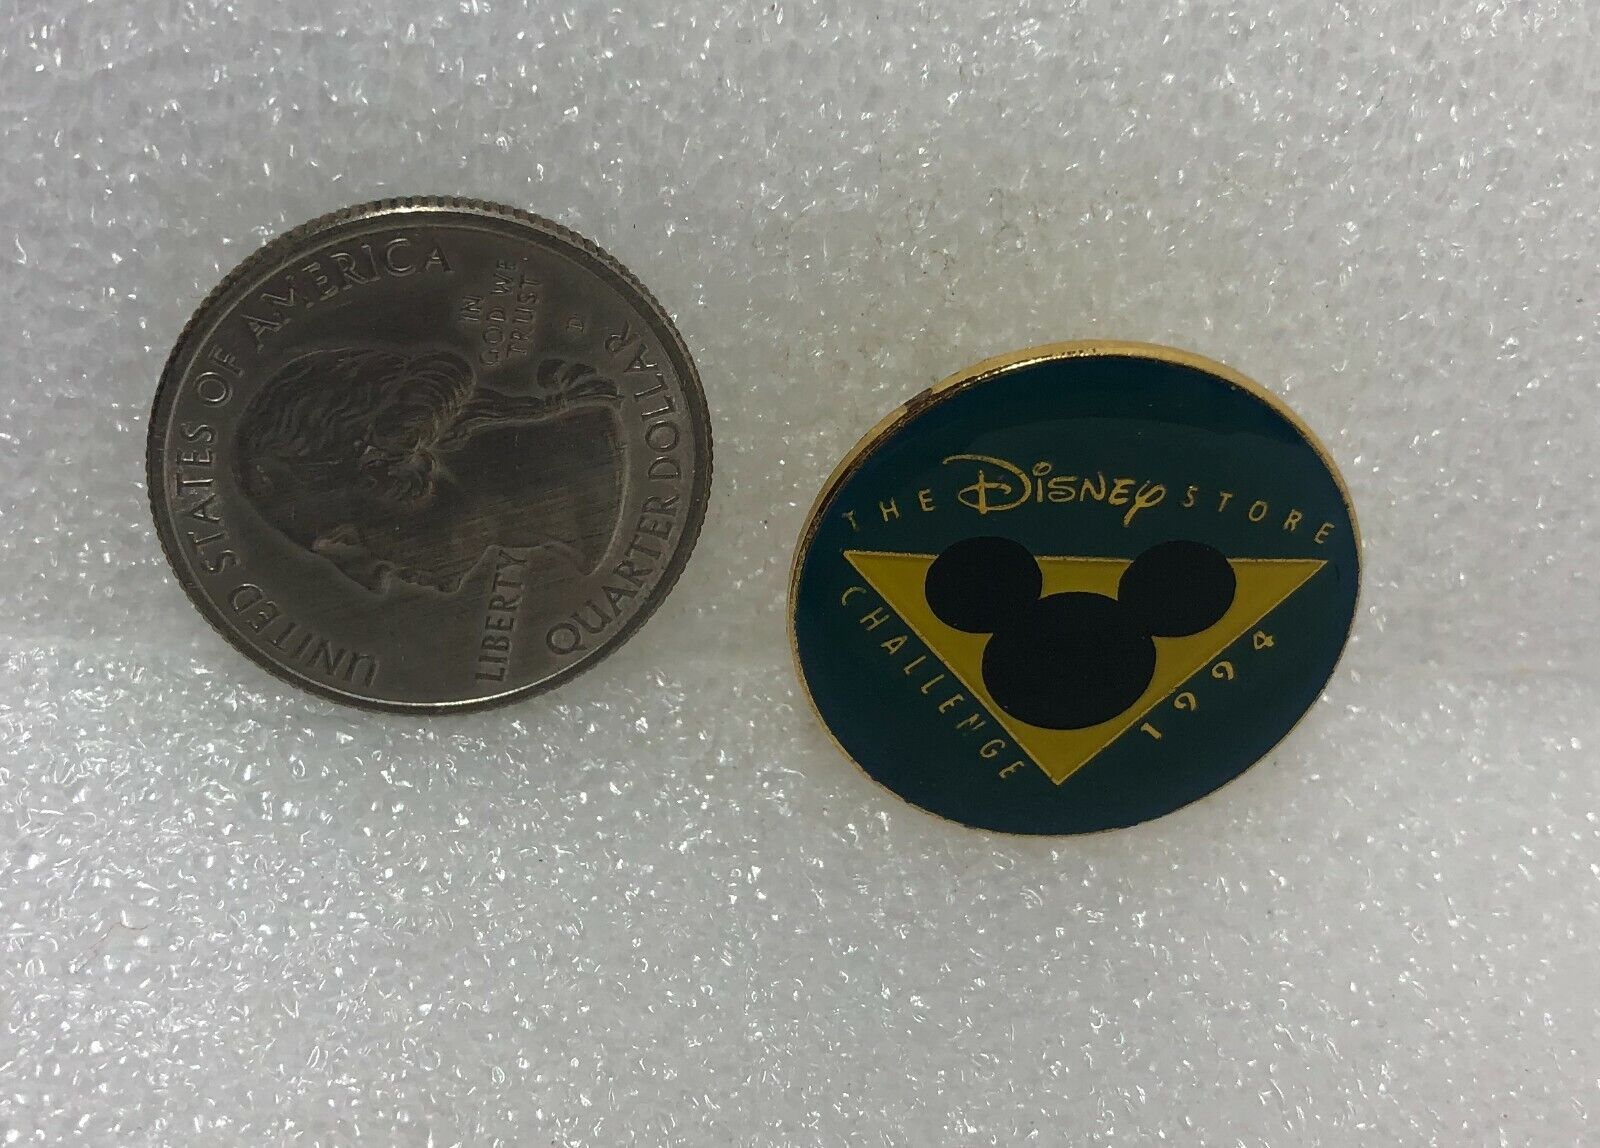 1994 The Disney Store Challenge Pin